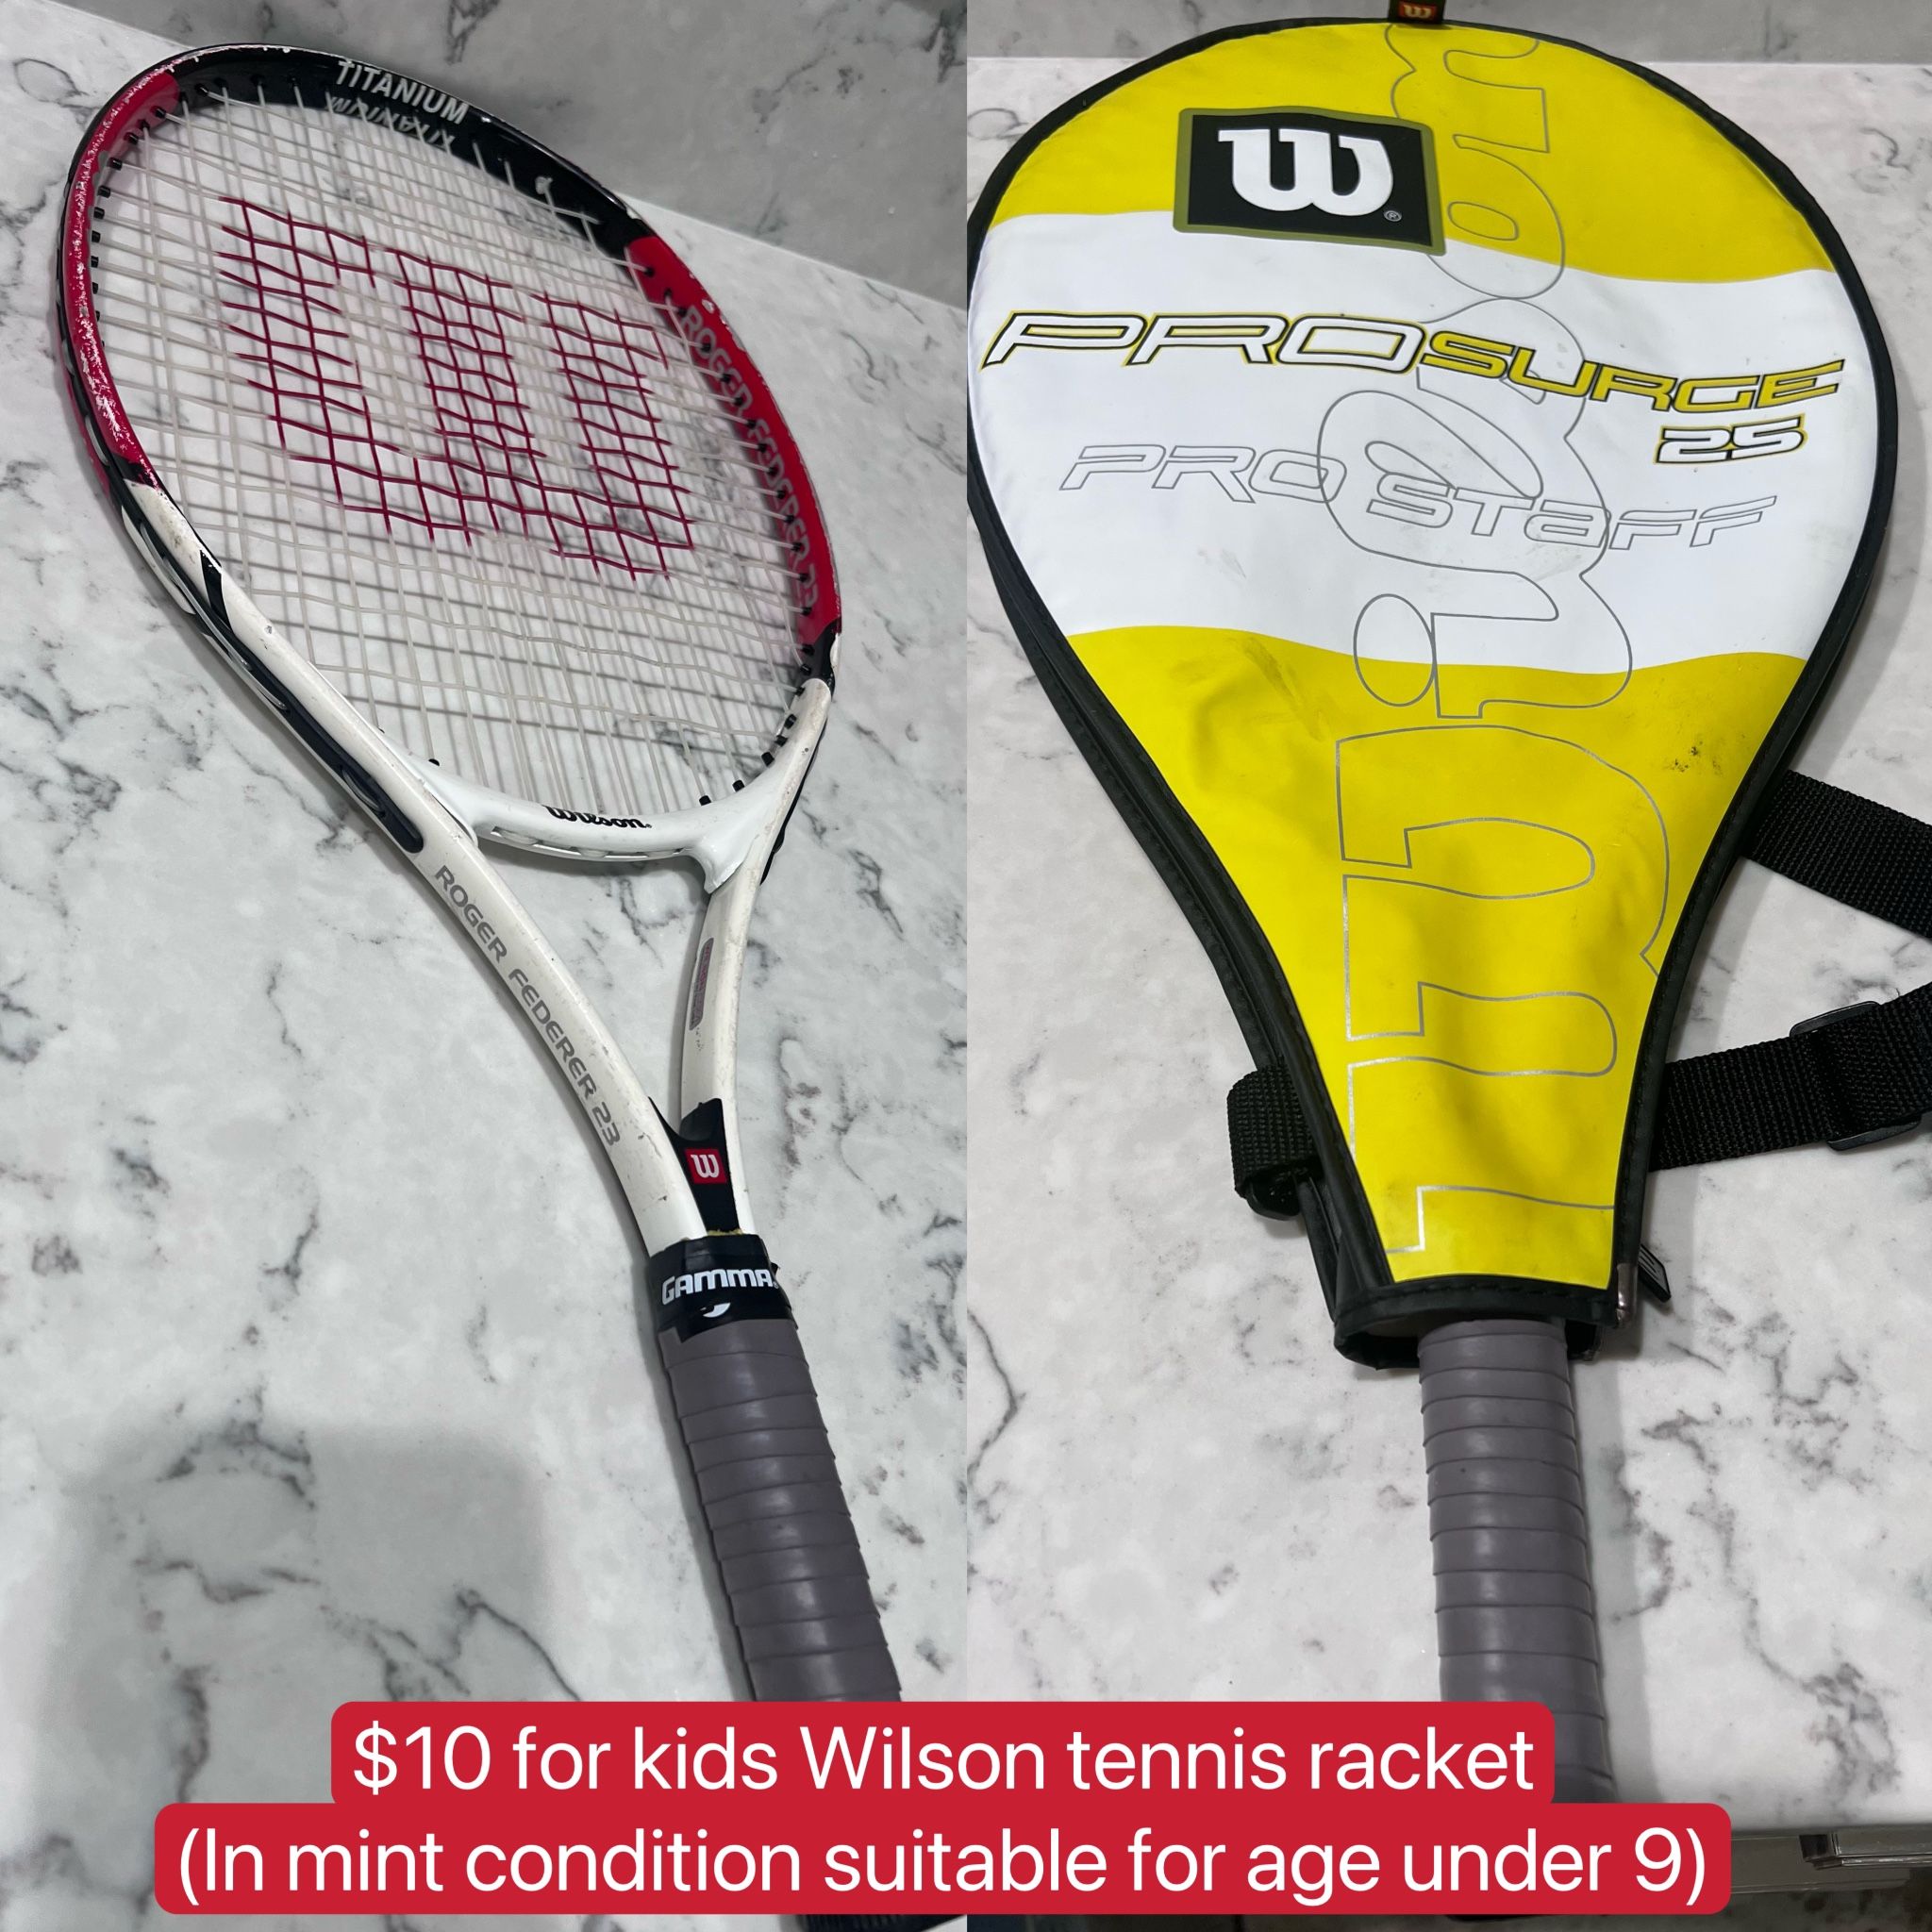 wilson tennis racket $10 for kids Wilson tennis racket